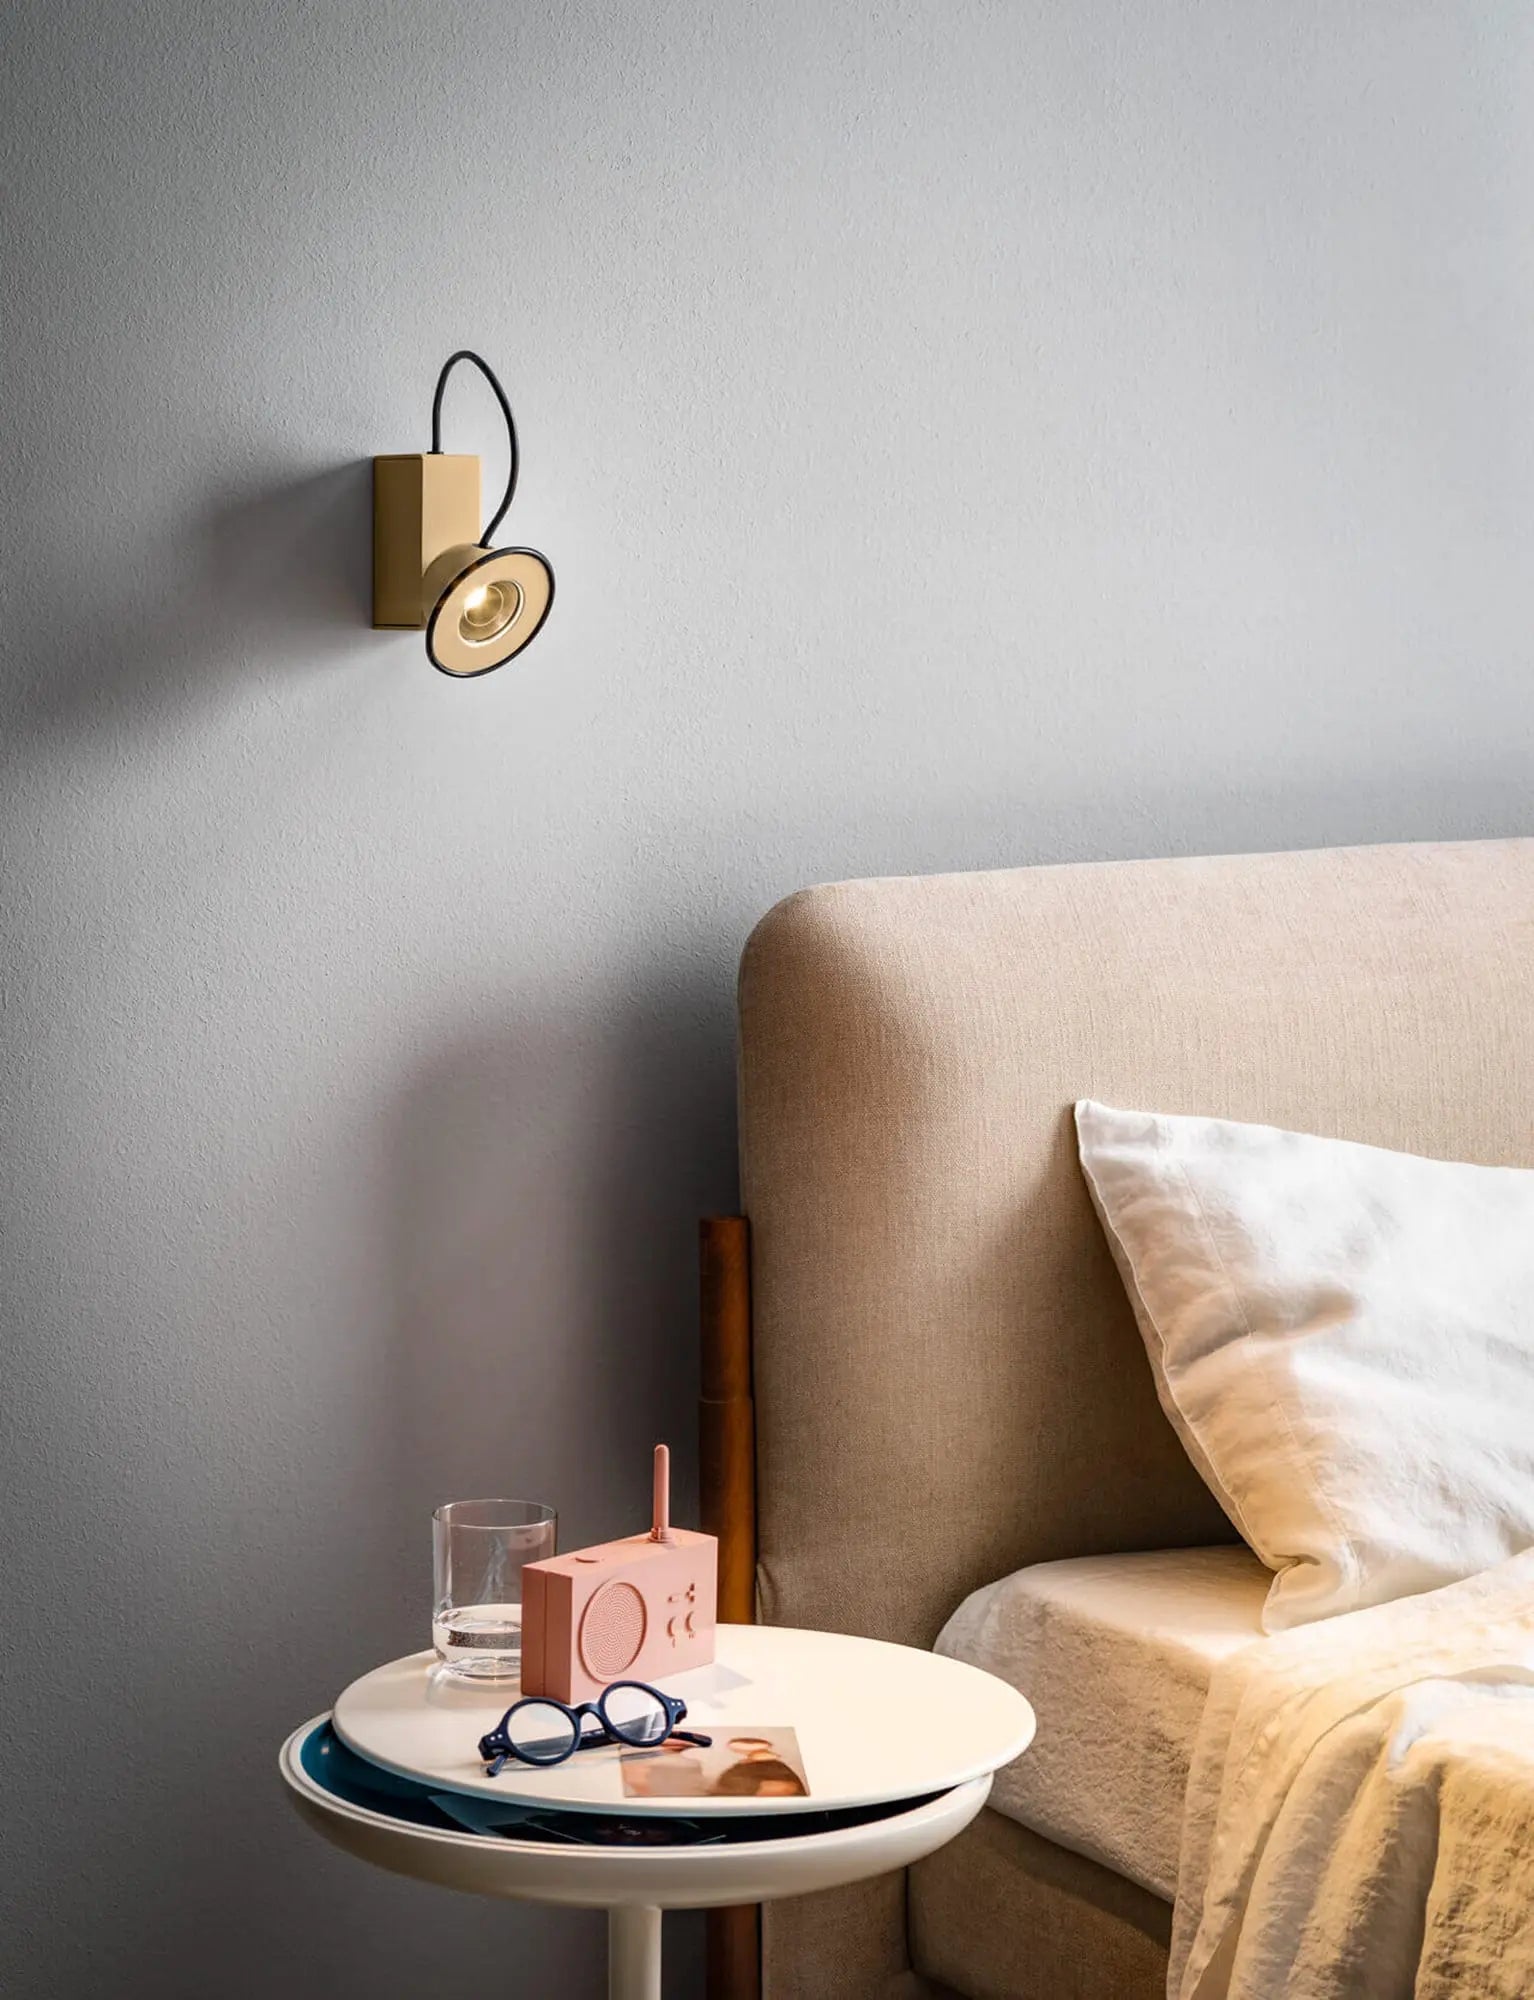 Minibox wall light in a bedroom